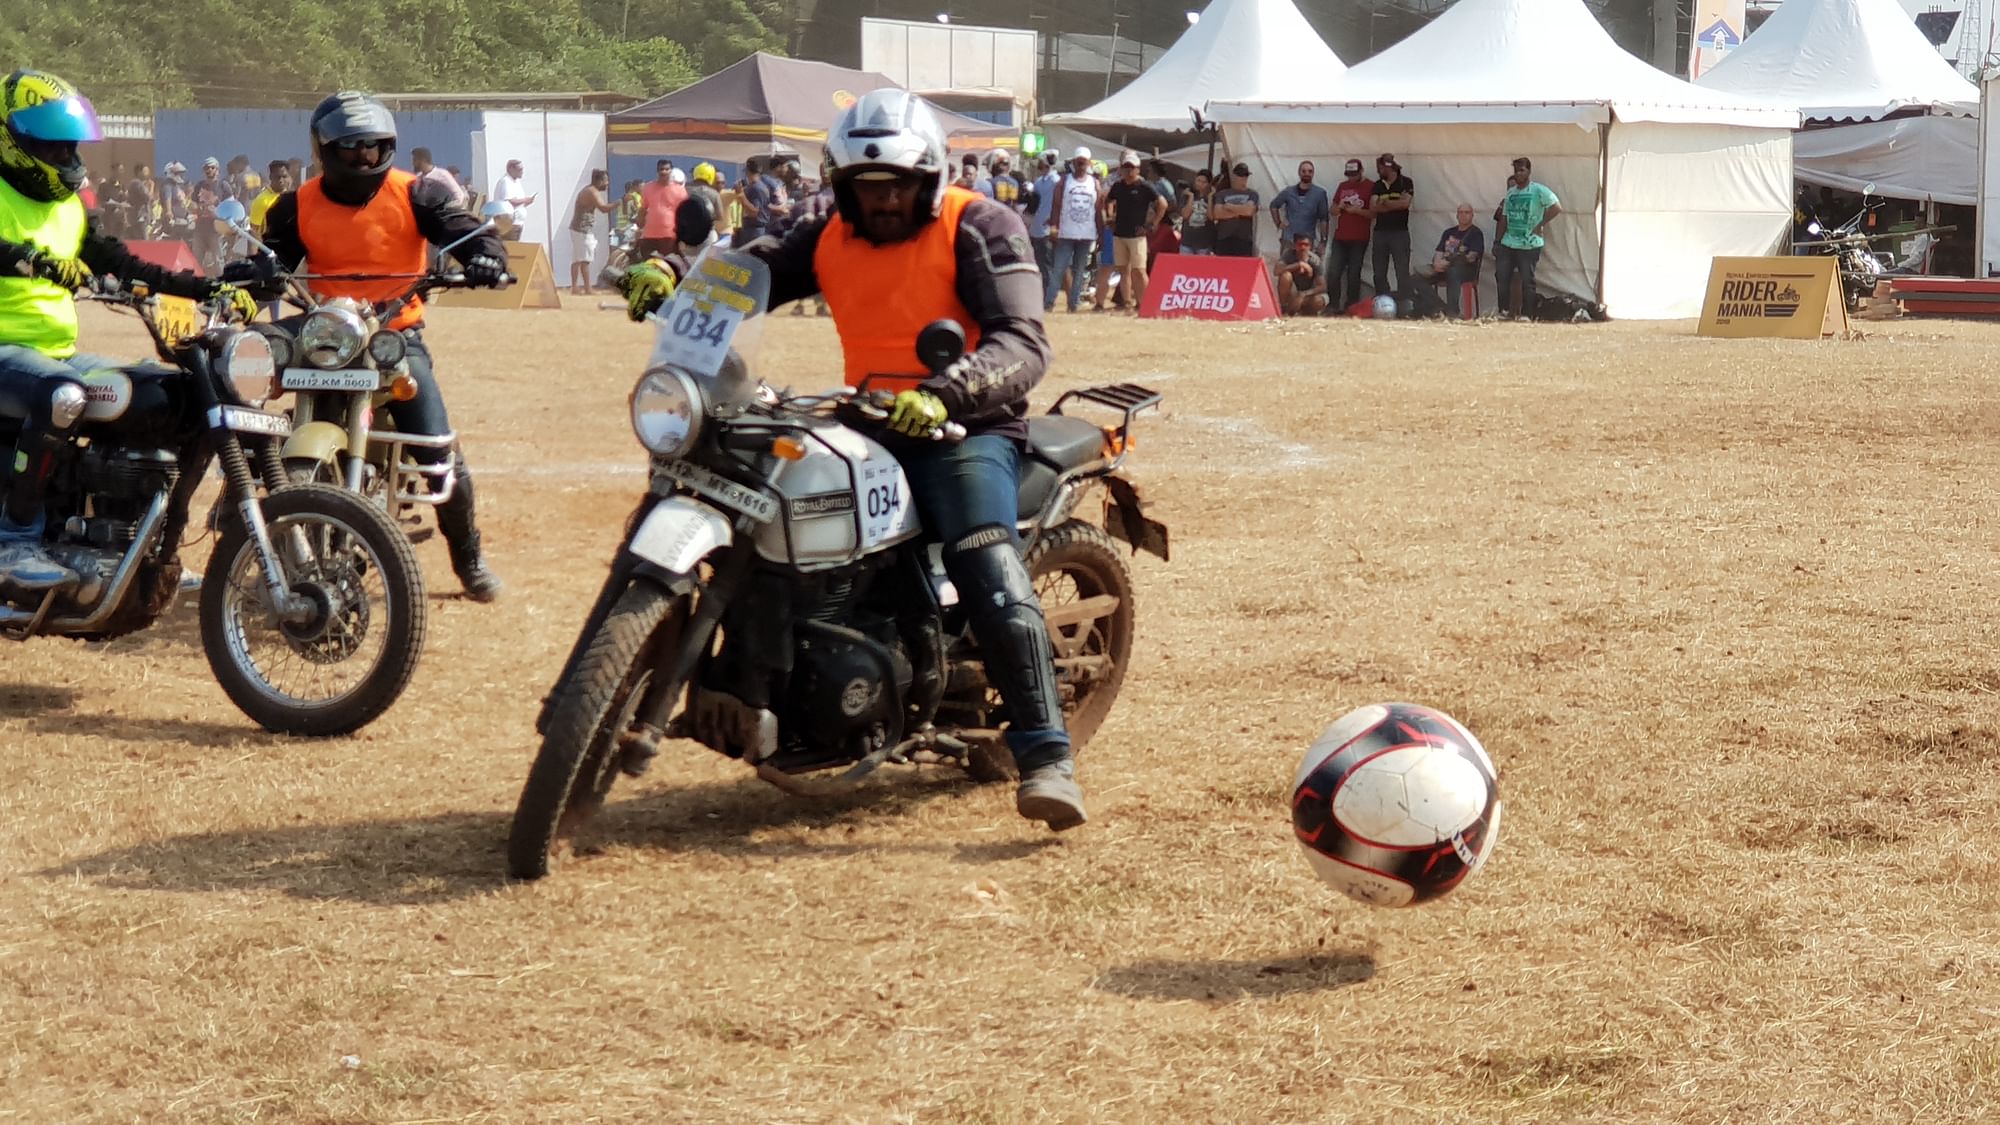 Motoball event at Rider Mania 2018.